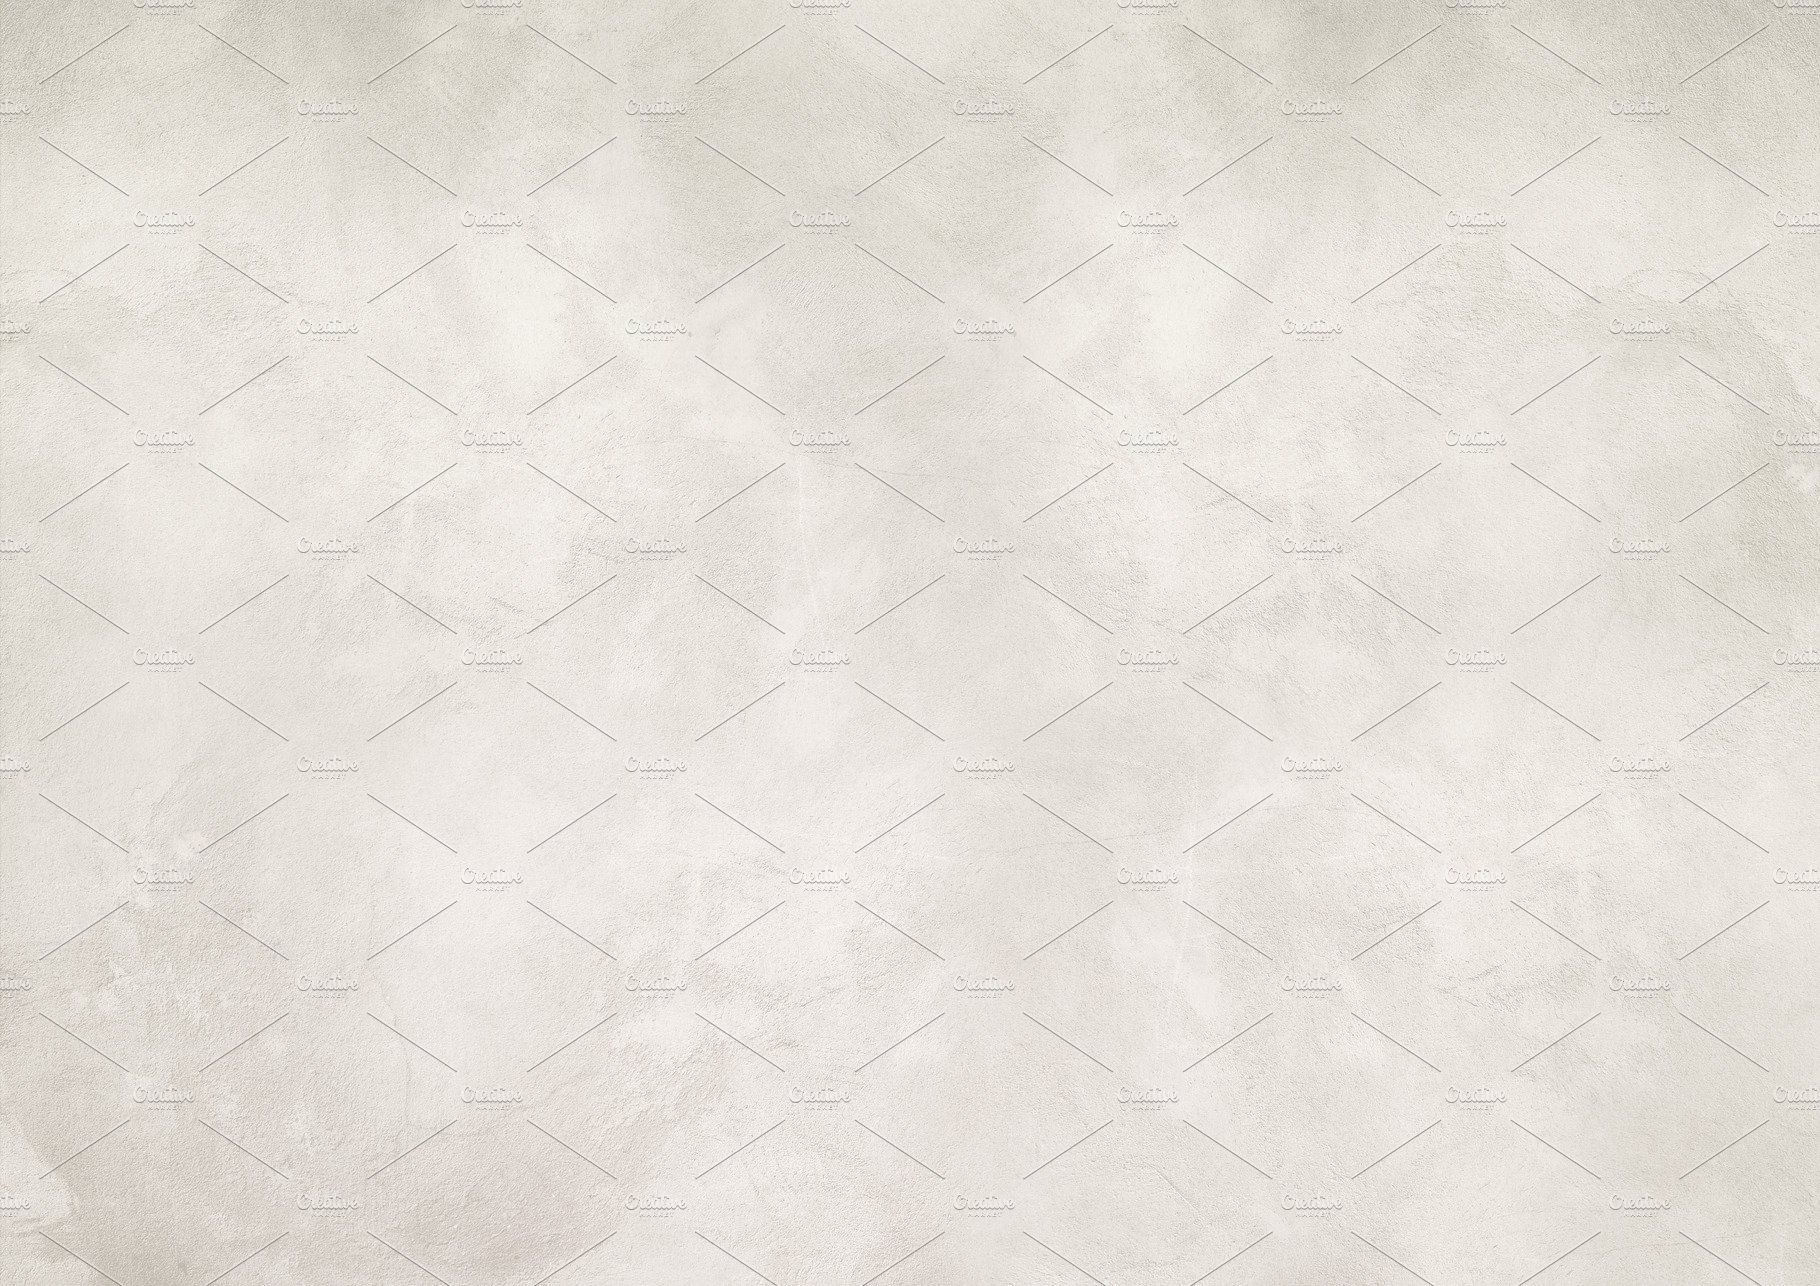 White concrete background texture wallpaper cover image.